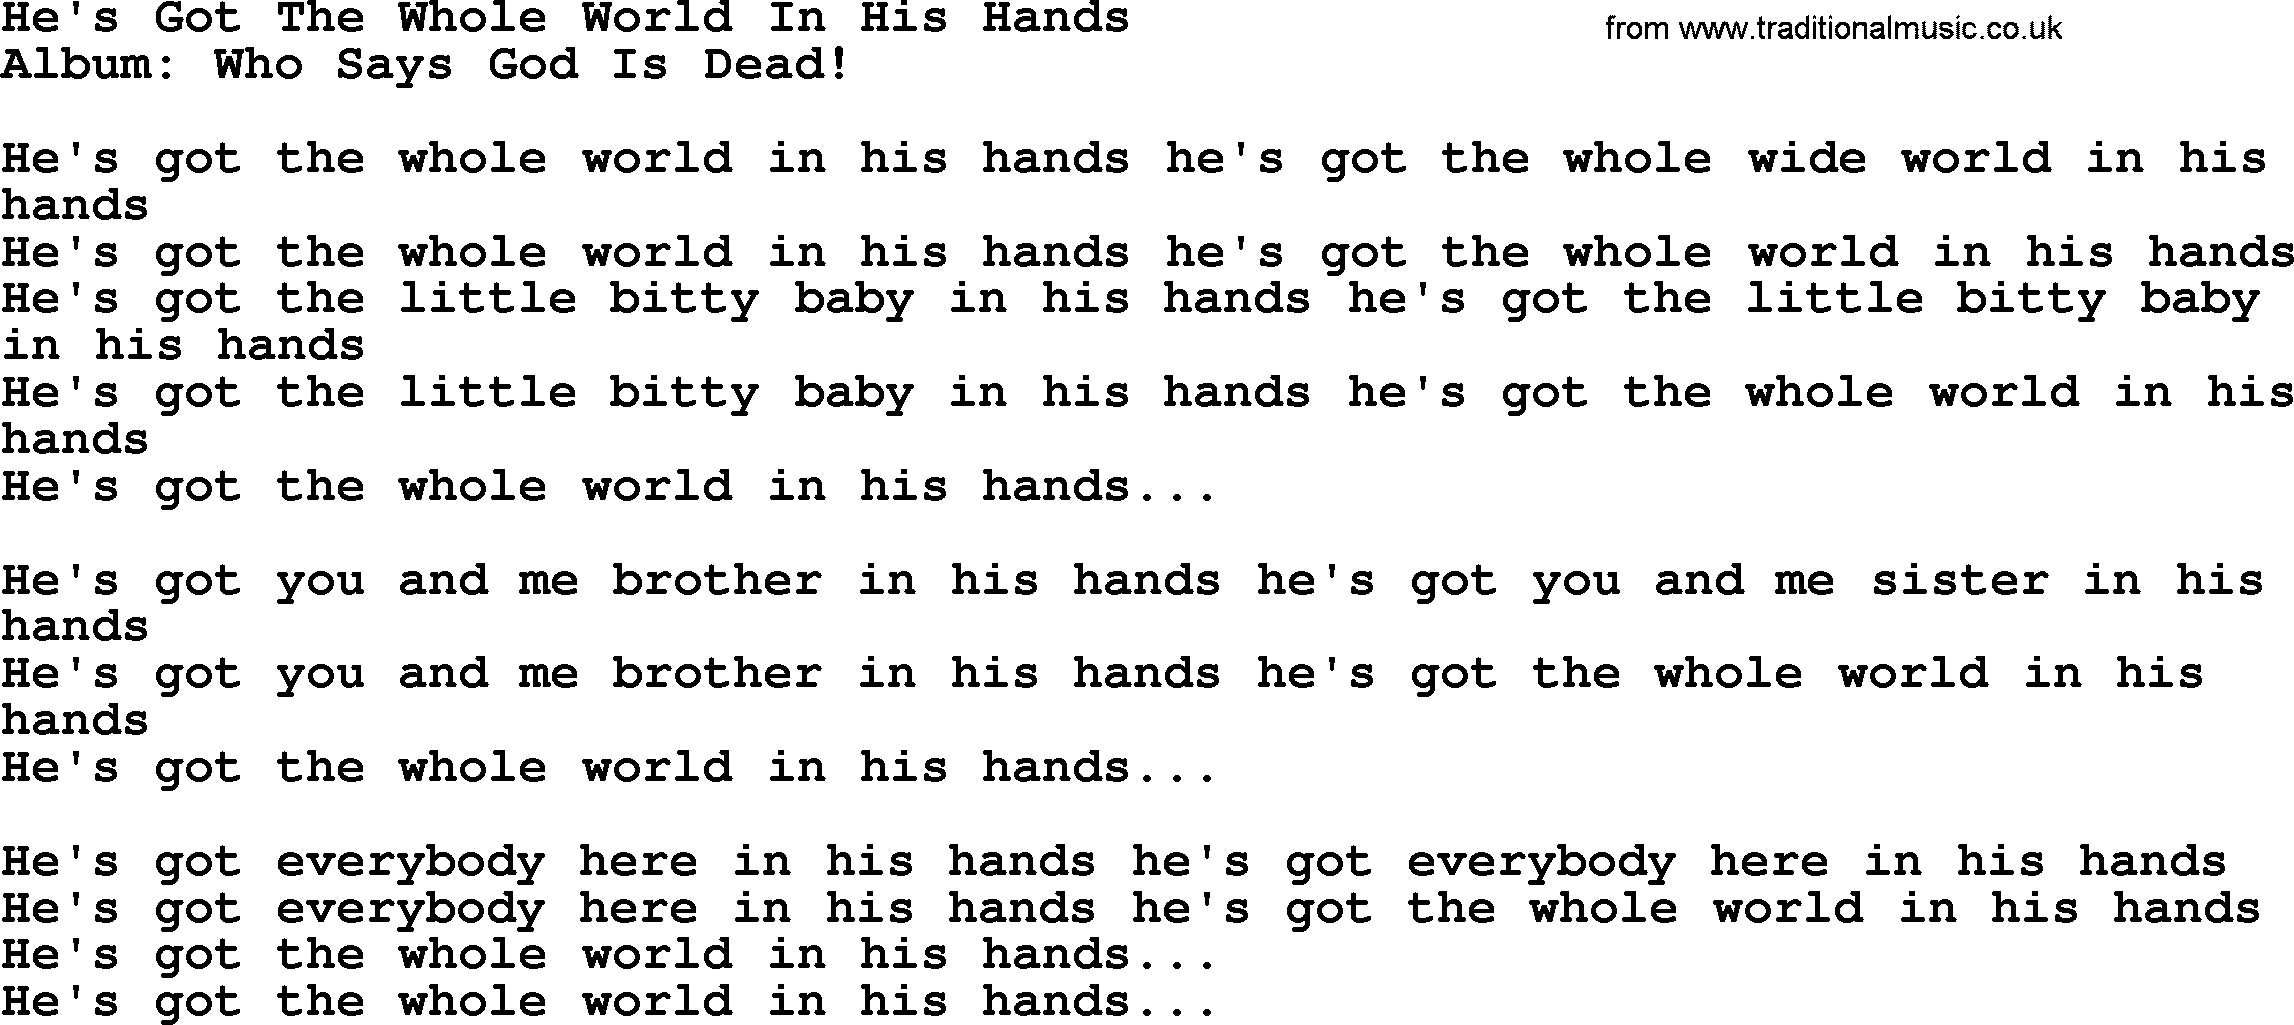 Loretta Lynn song: He's Got The Whole World In His Hands lyrics